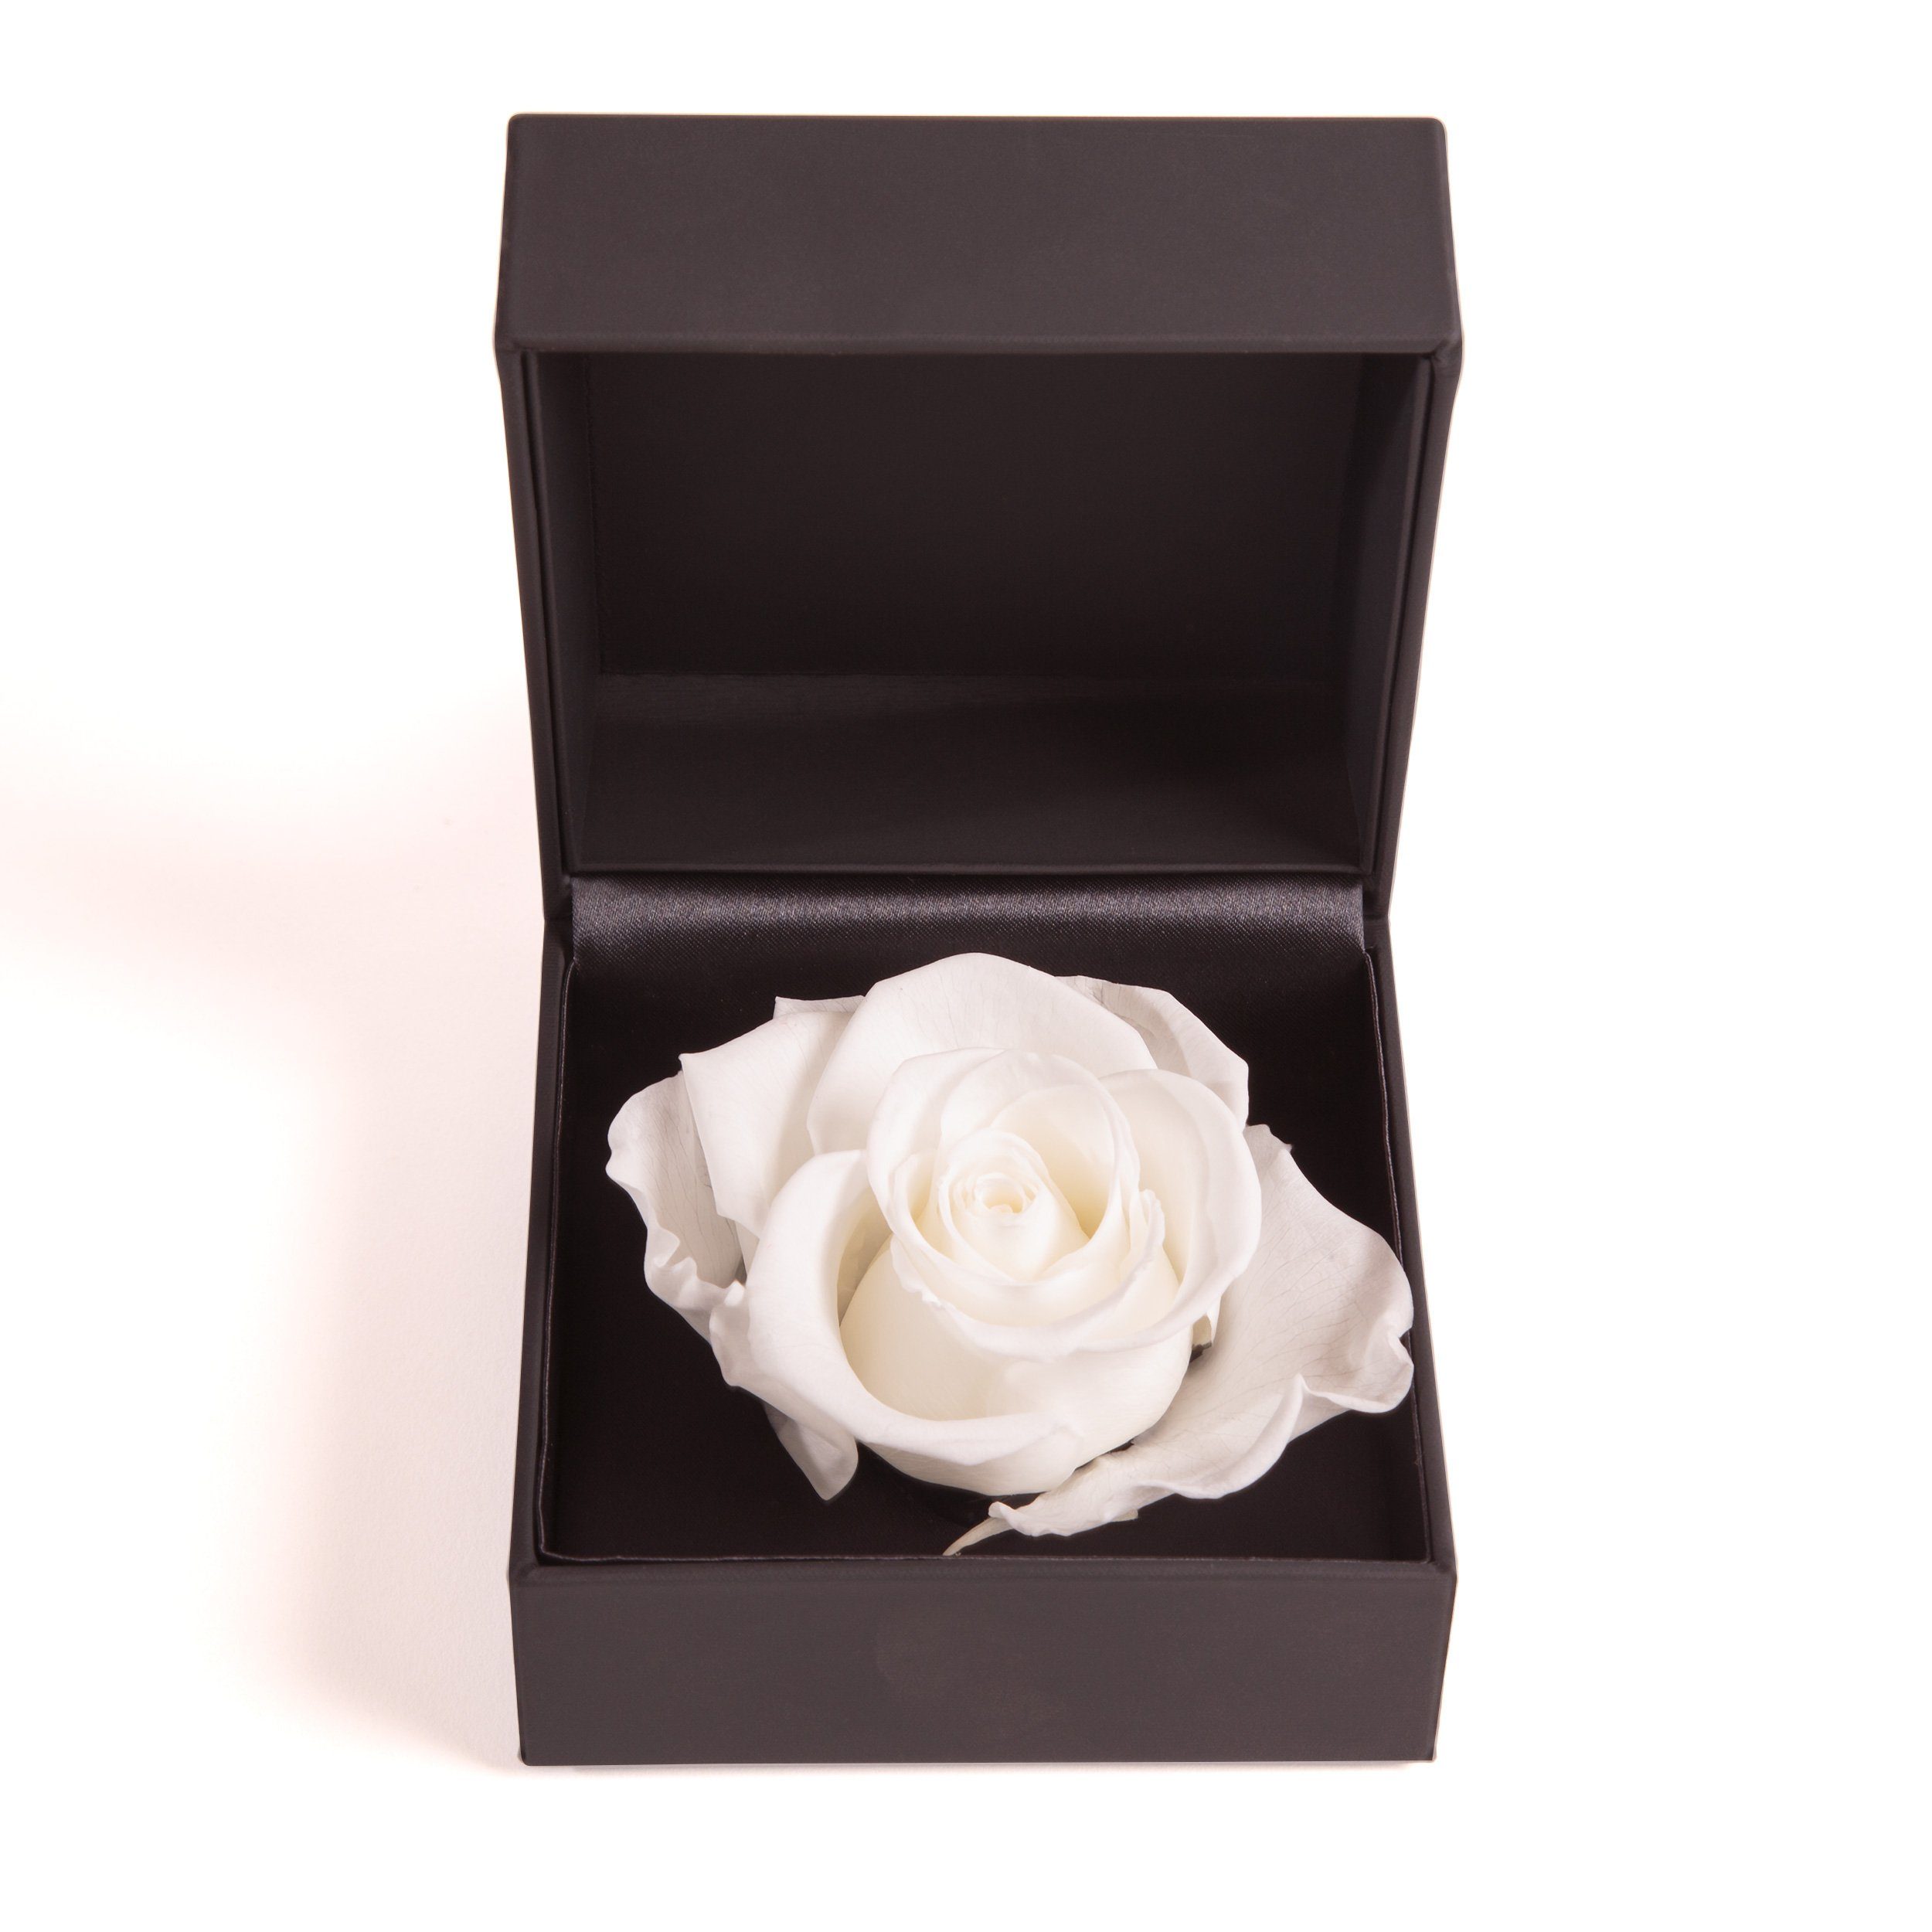 ROSEMARIE konserviert Rose Ringbox Rosenbox Groß Kunstblume in Rose cm, Weiß Höhe Infinity Ringdose Rose, Box Langlebige Heidelberg, 9 SCHULZ